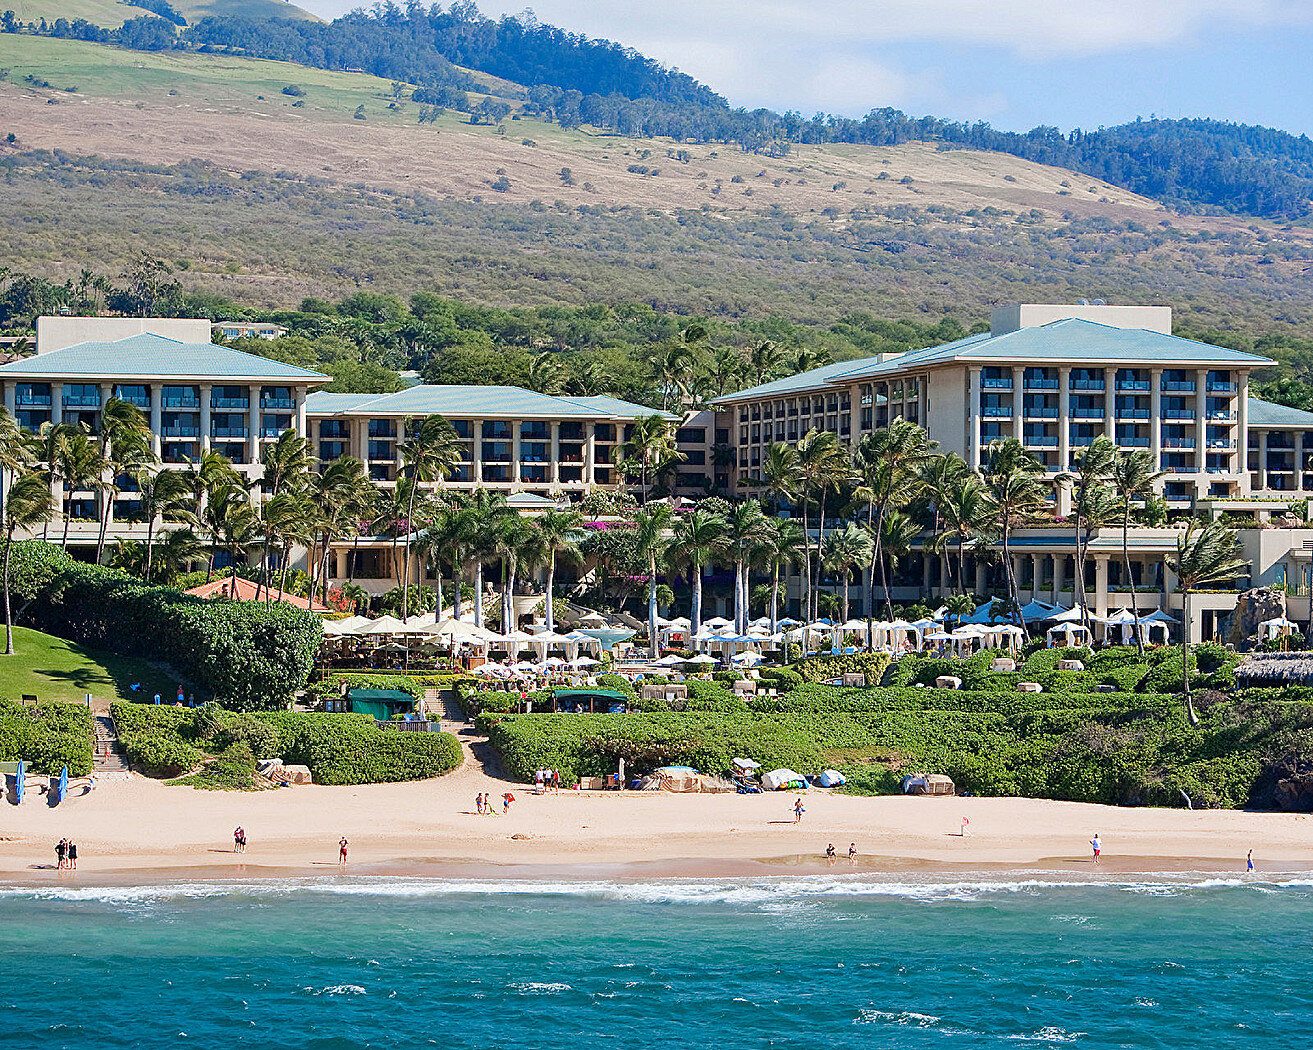   Four Seasons Resort Maui at Wailea from the beach (photo credit: Four Seasons)  